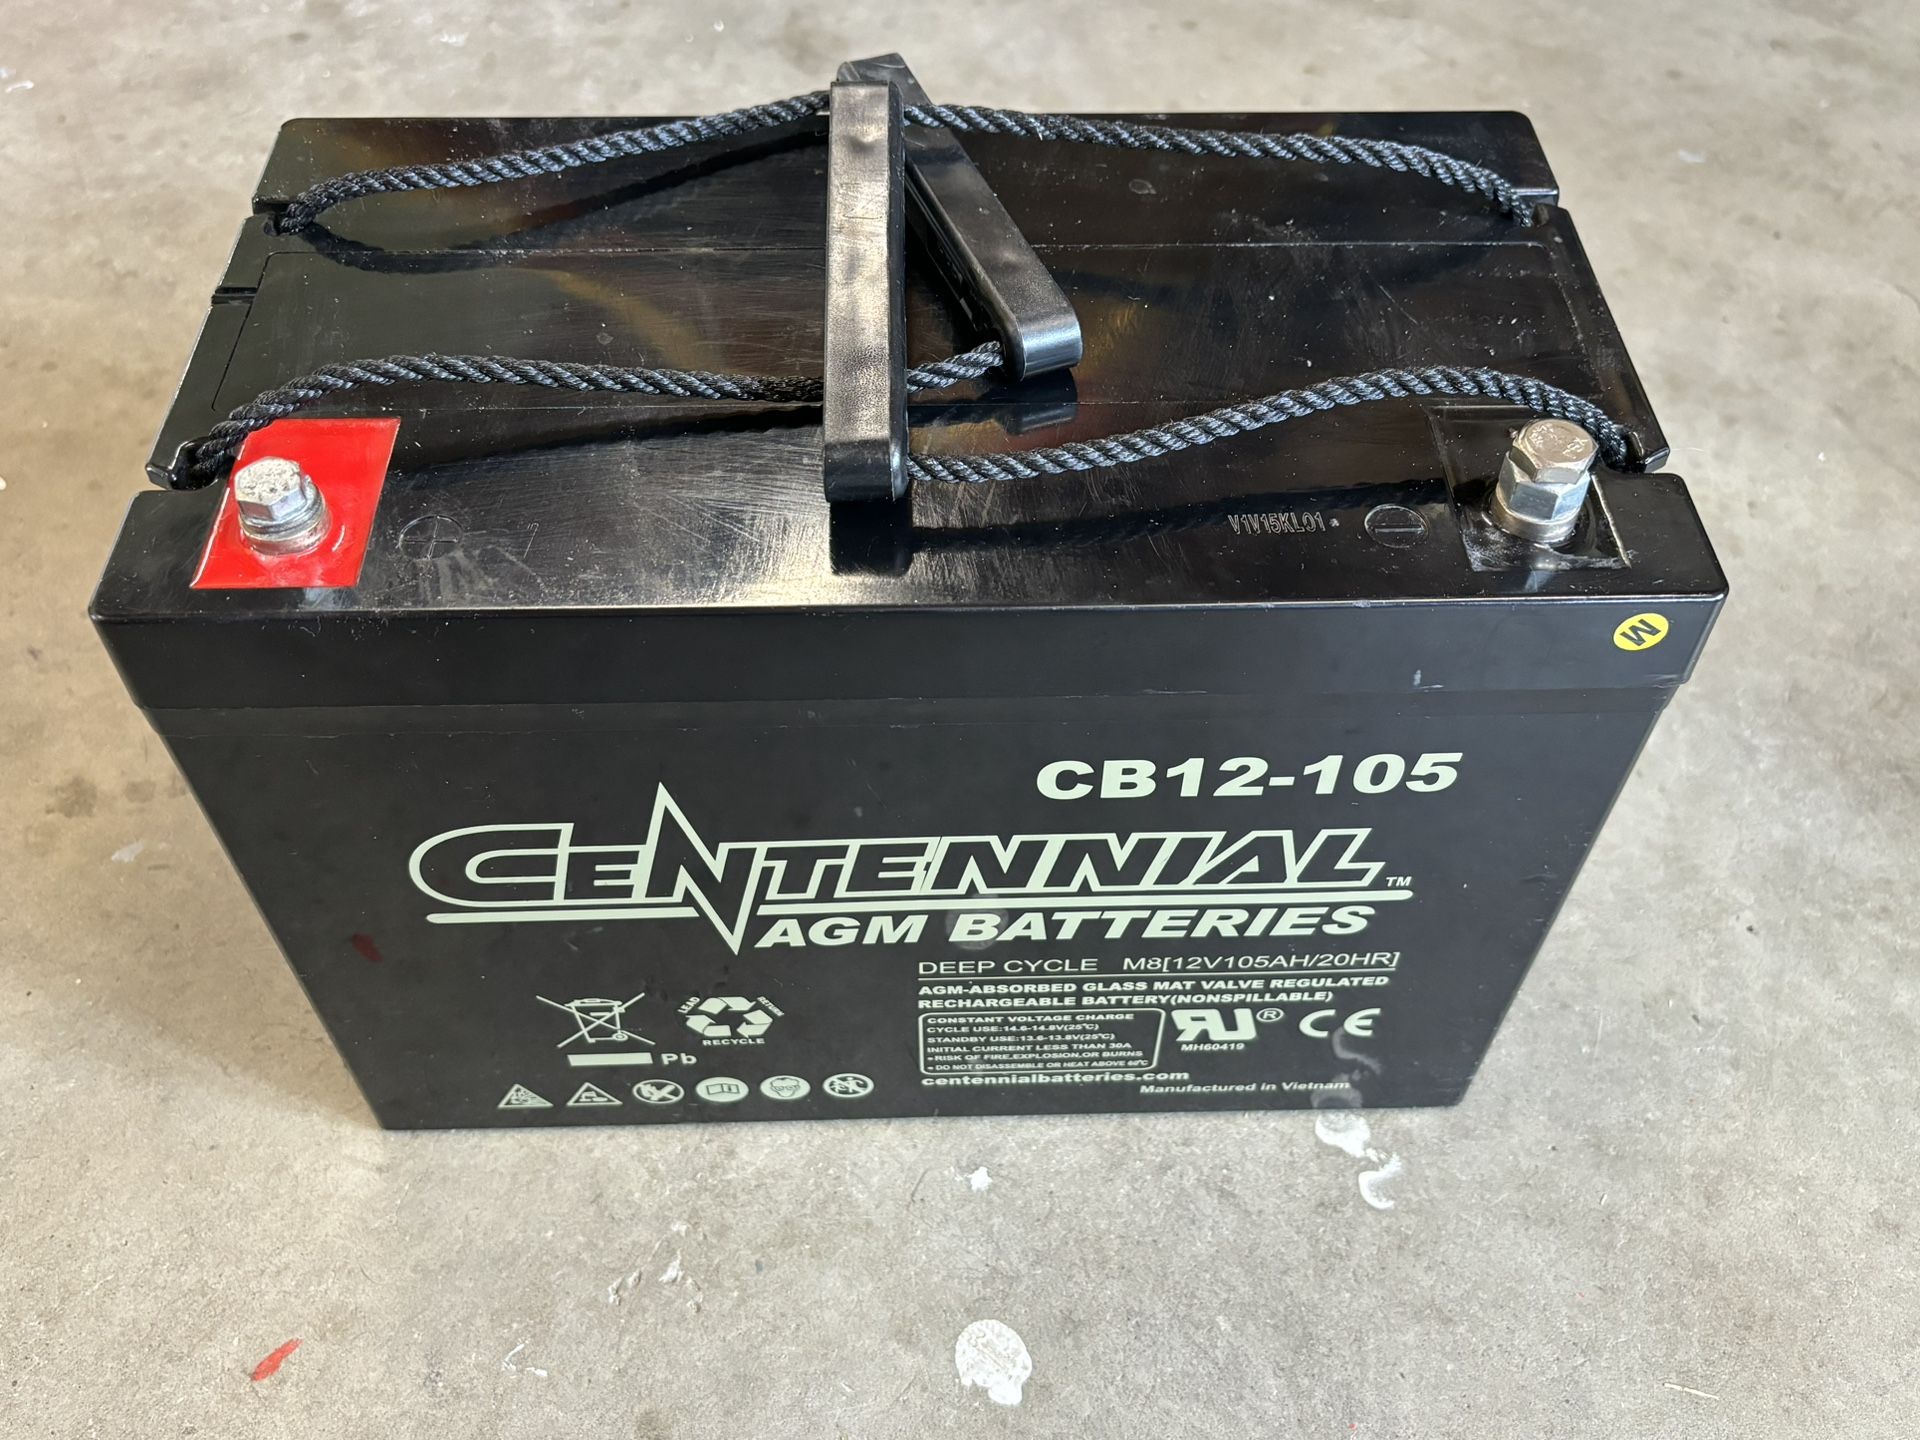 Centennial Group 27 CB12-105 12v Deep Cycle AGM Battery 